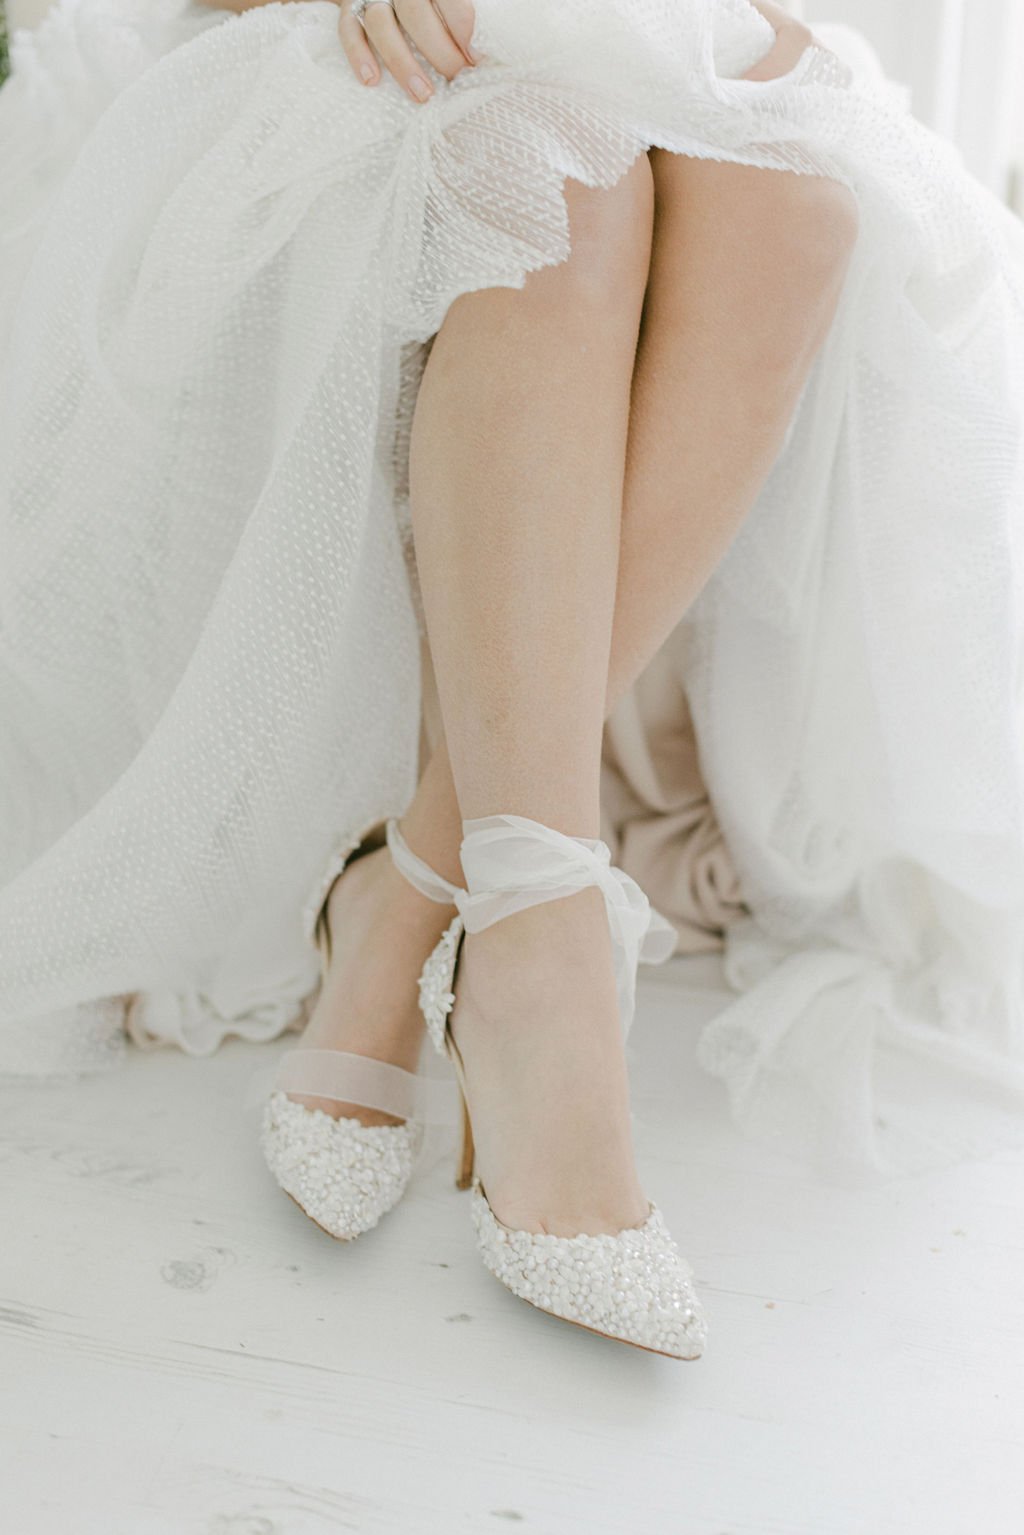 ‘Winter Musings’ - Wedding Inspiration — Clementine Moon | Wedding Florist